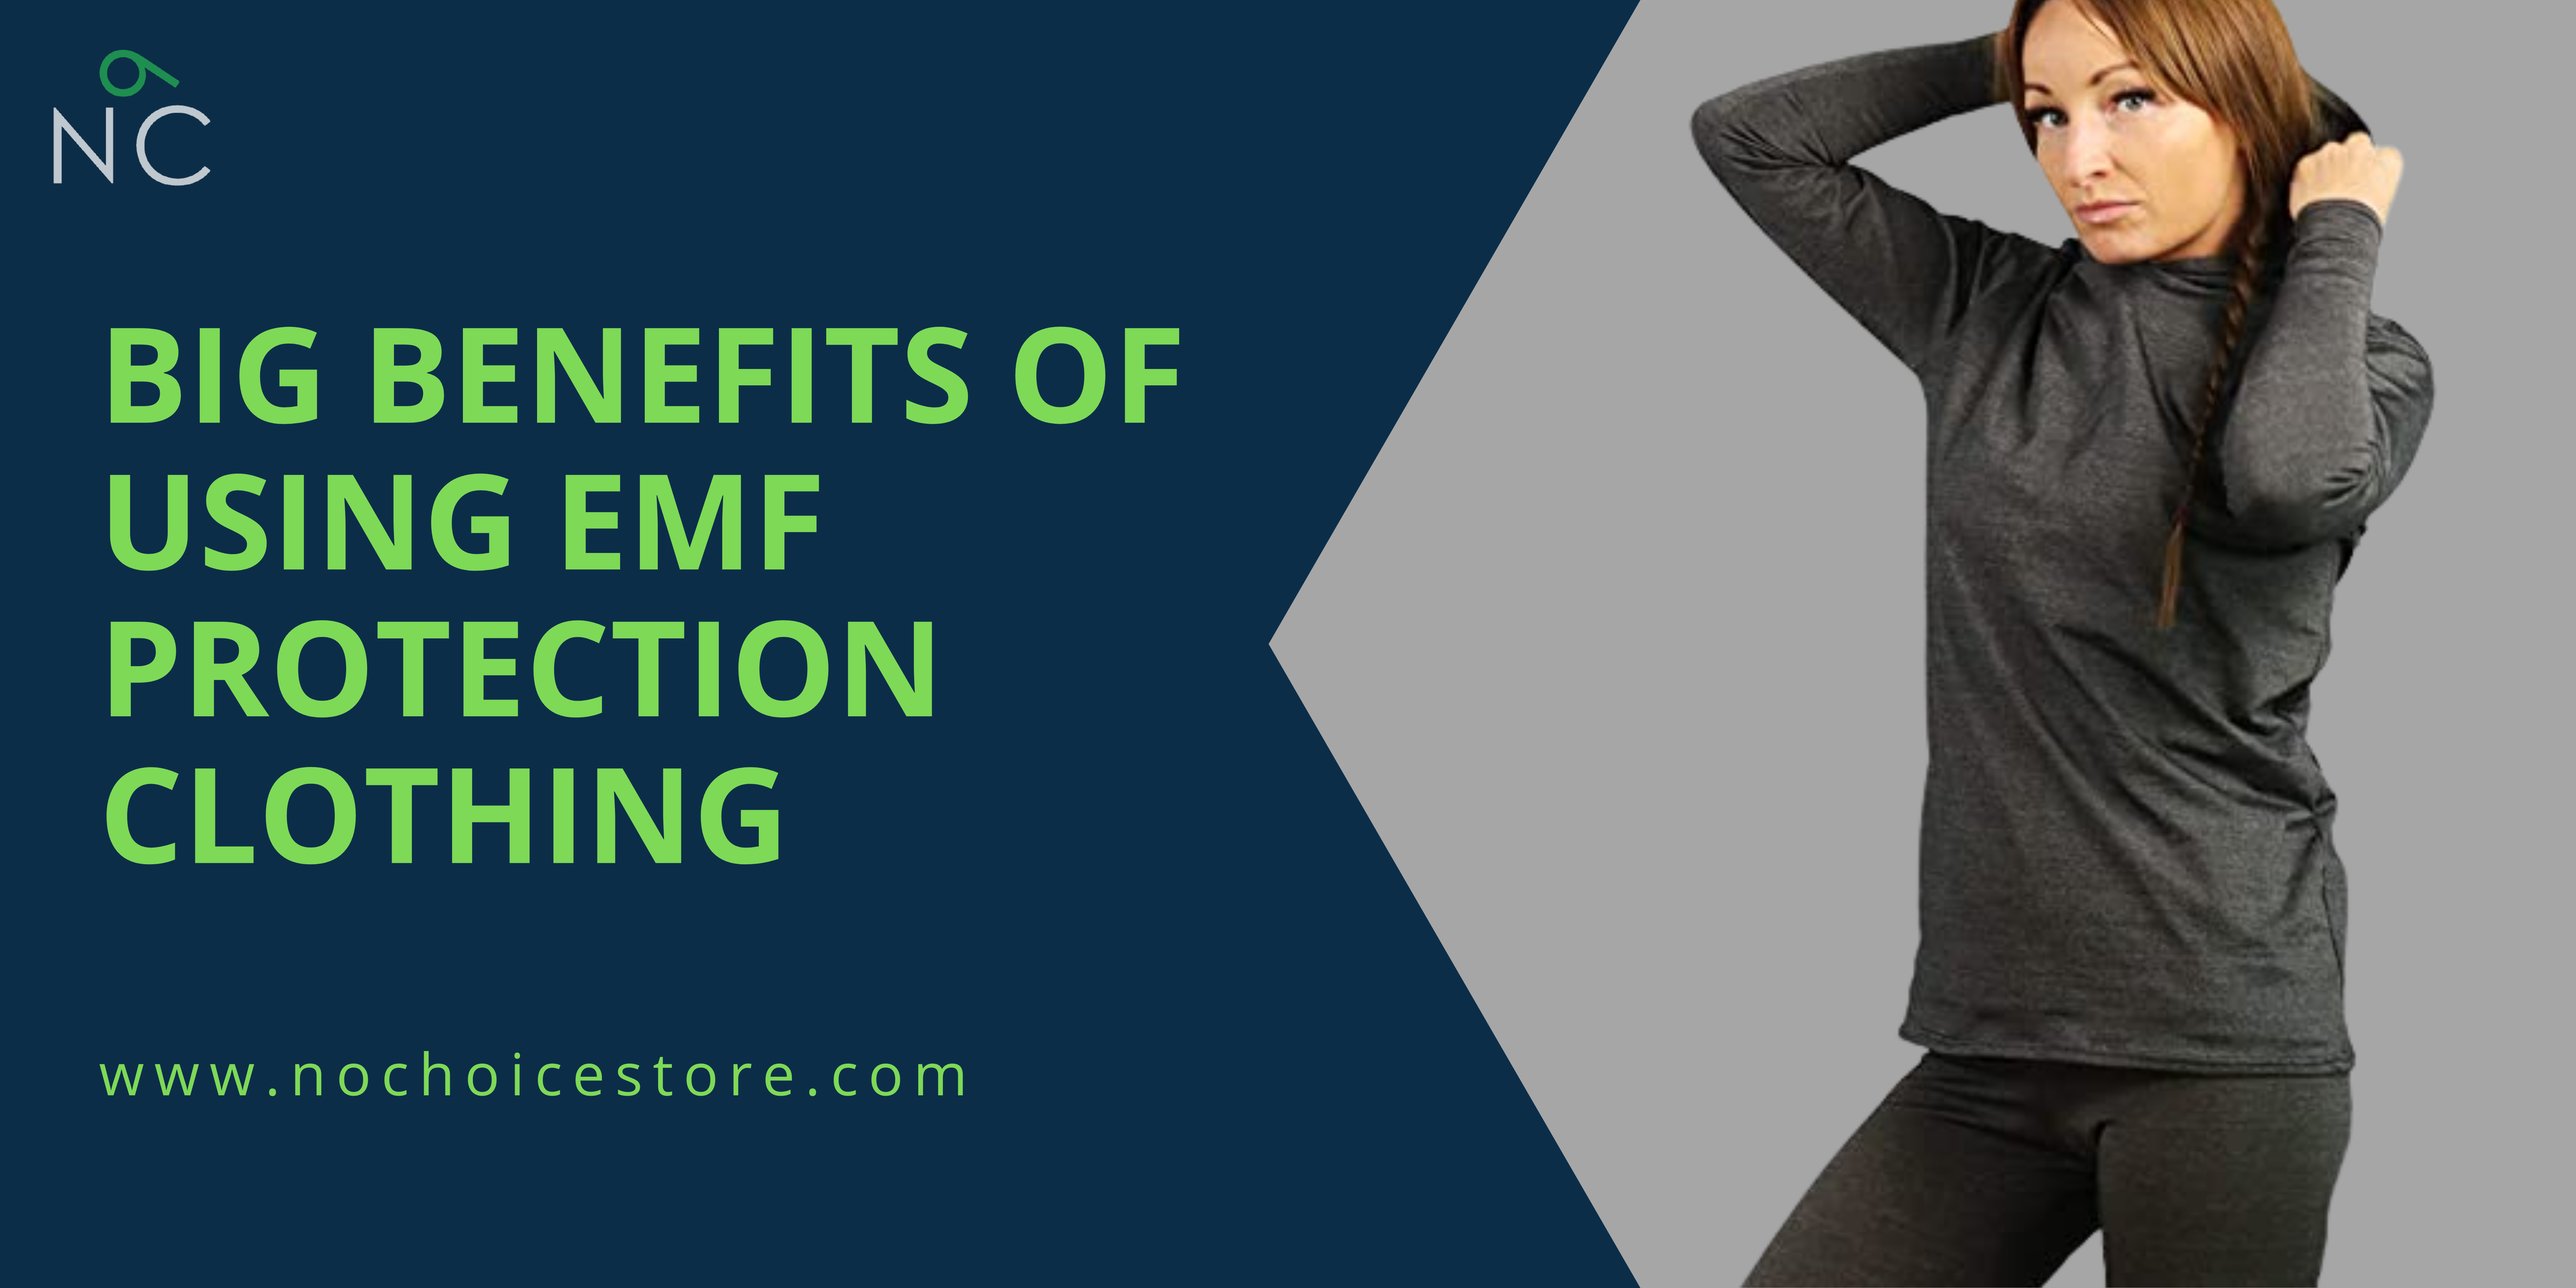 Big Benefits of Using Emf Protection Clothing